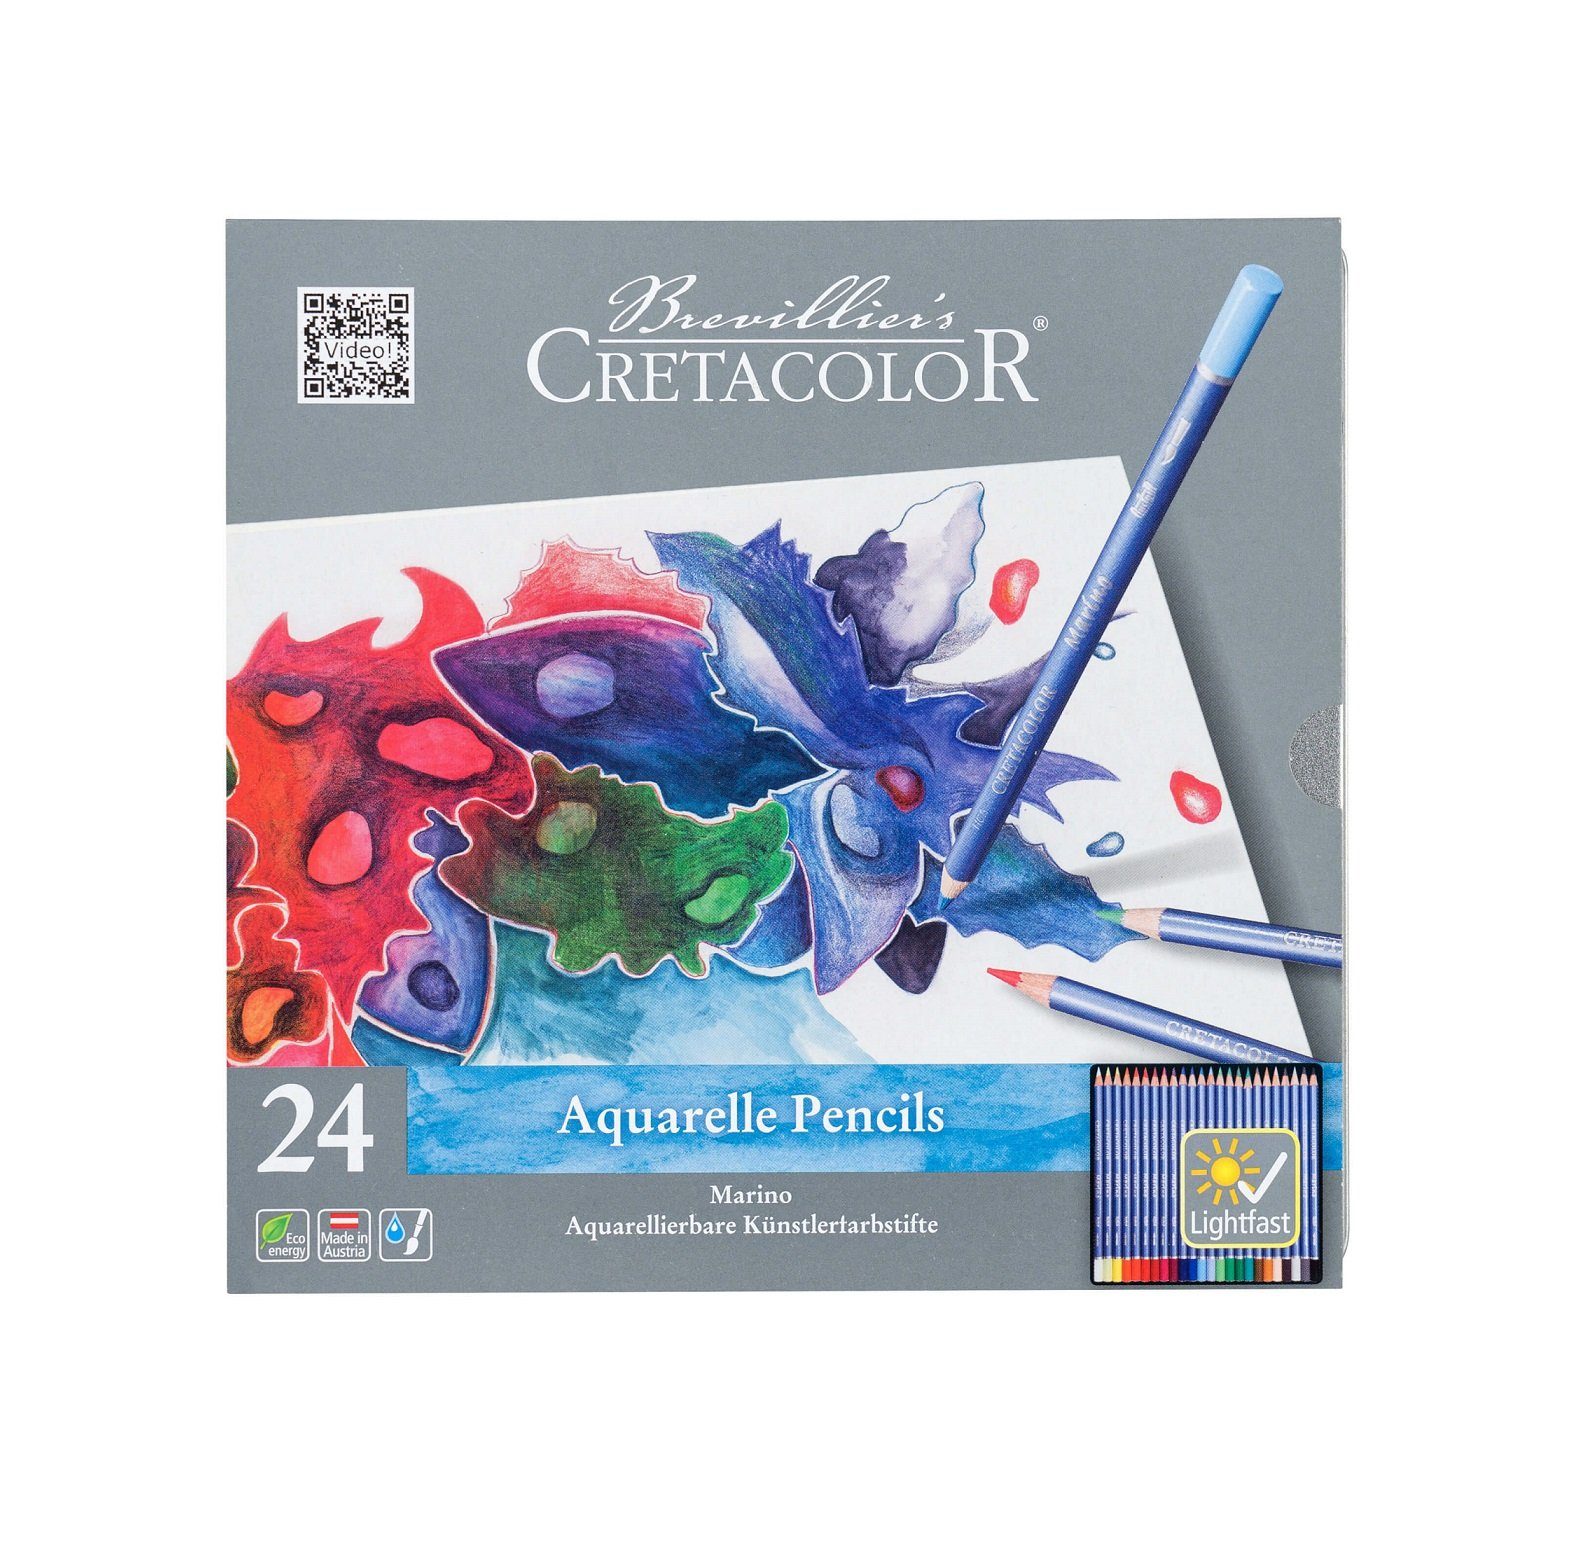 Brevilliers Cretacolor Aquarellstifte Marino Aquarellstifte, 24 Farben, hochwertige Künstlerfarbstifte - Made in Austria